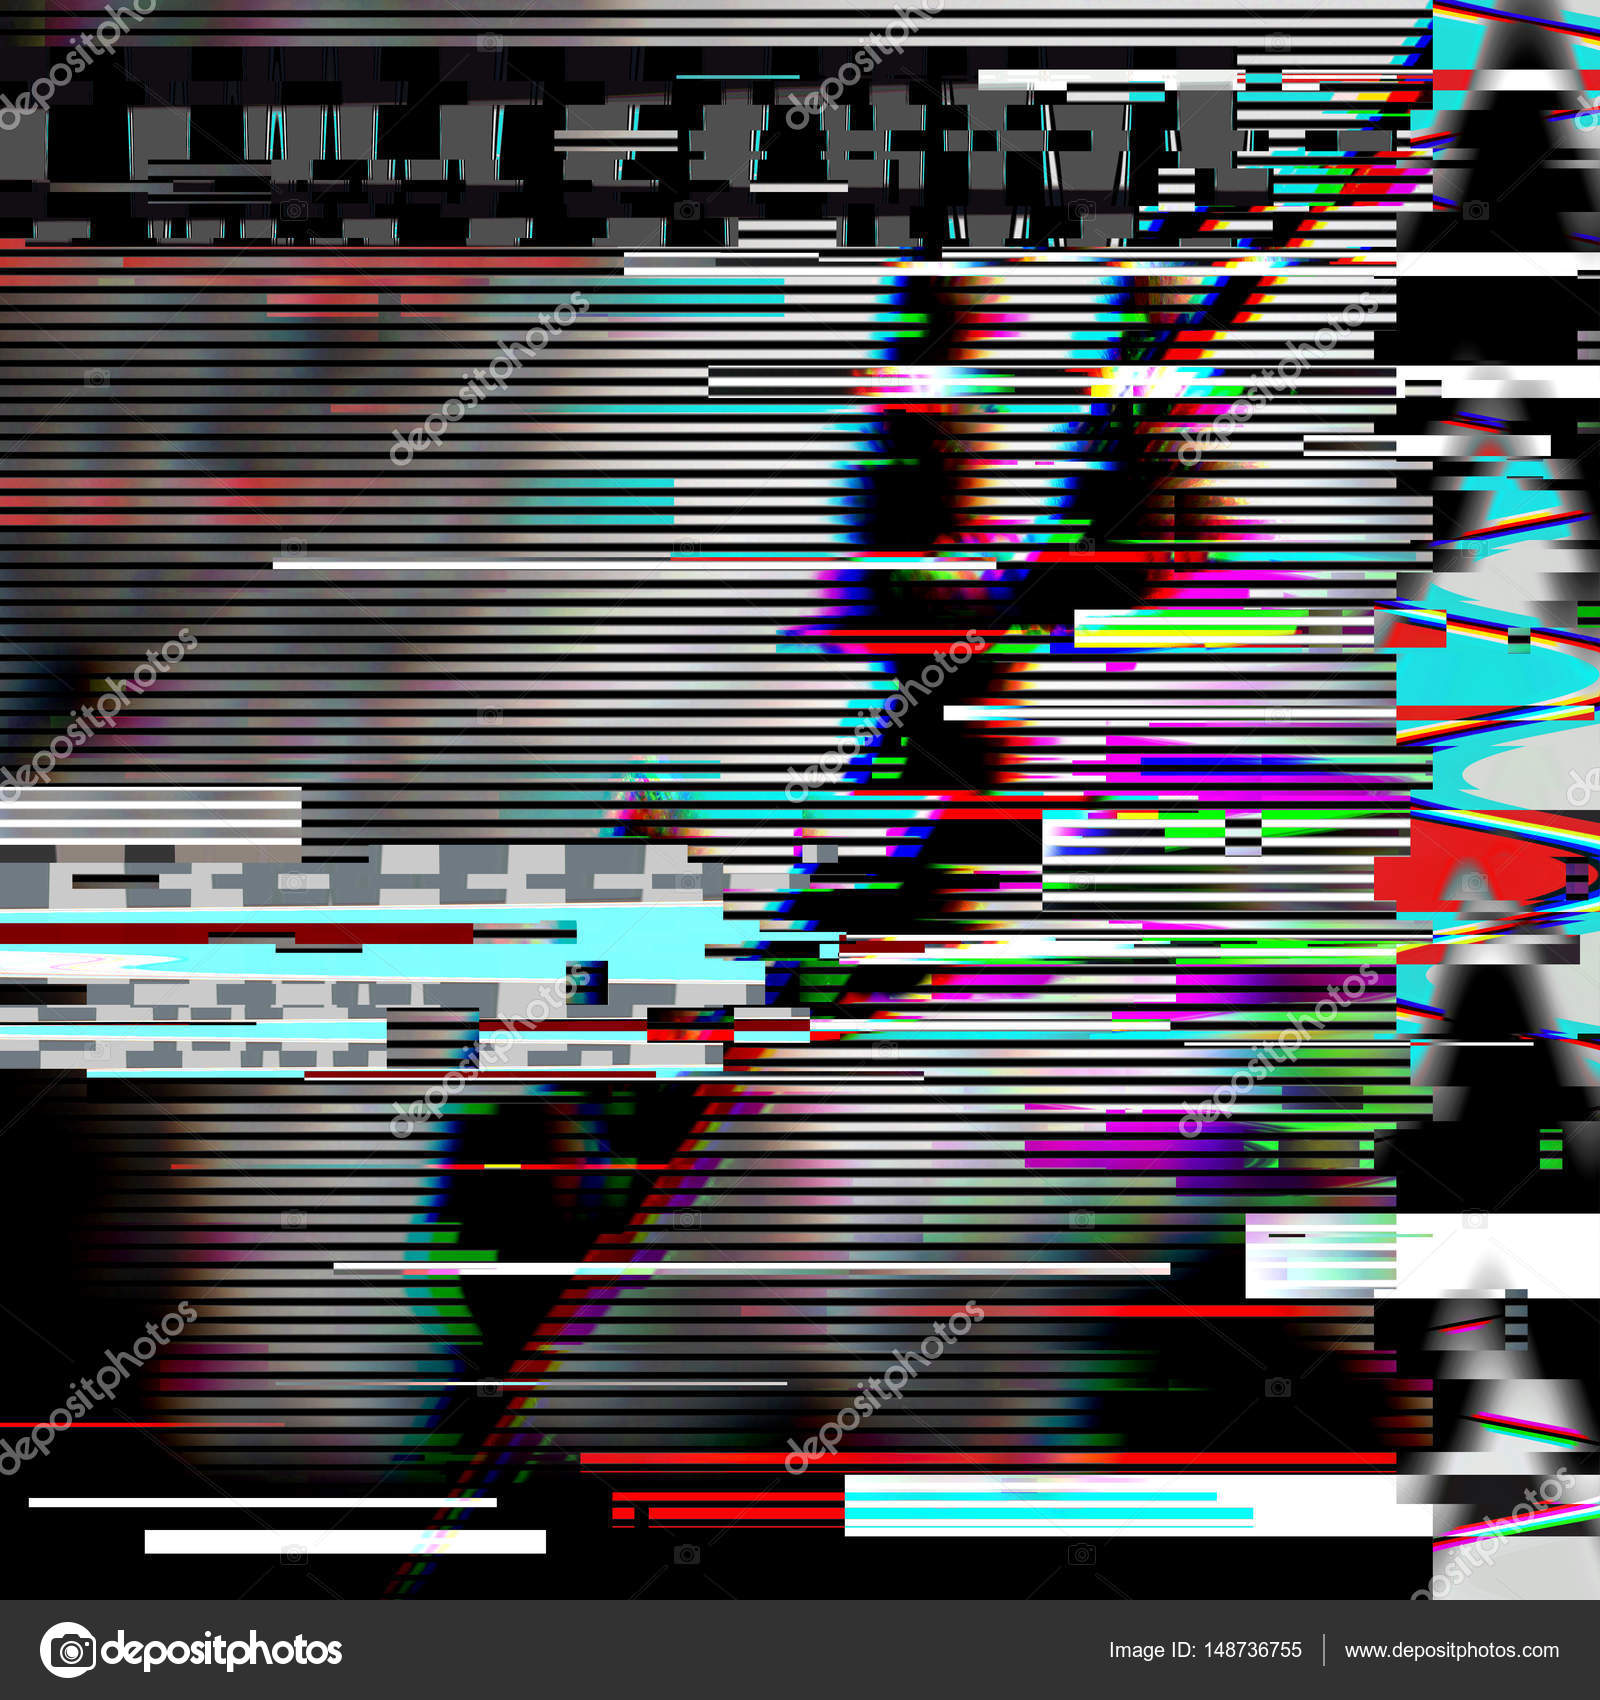 Digital glitch effect on computer or TV screen